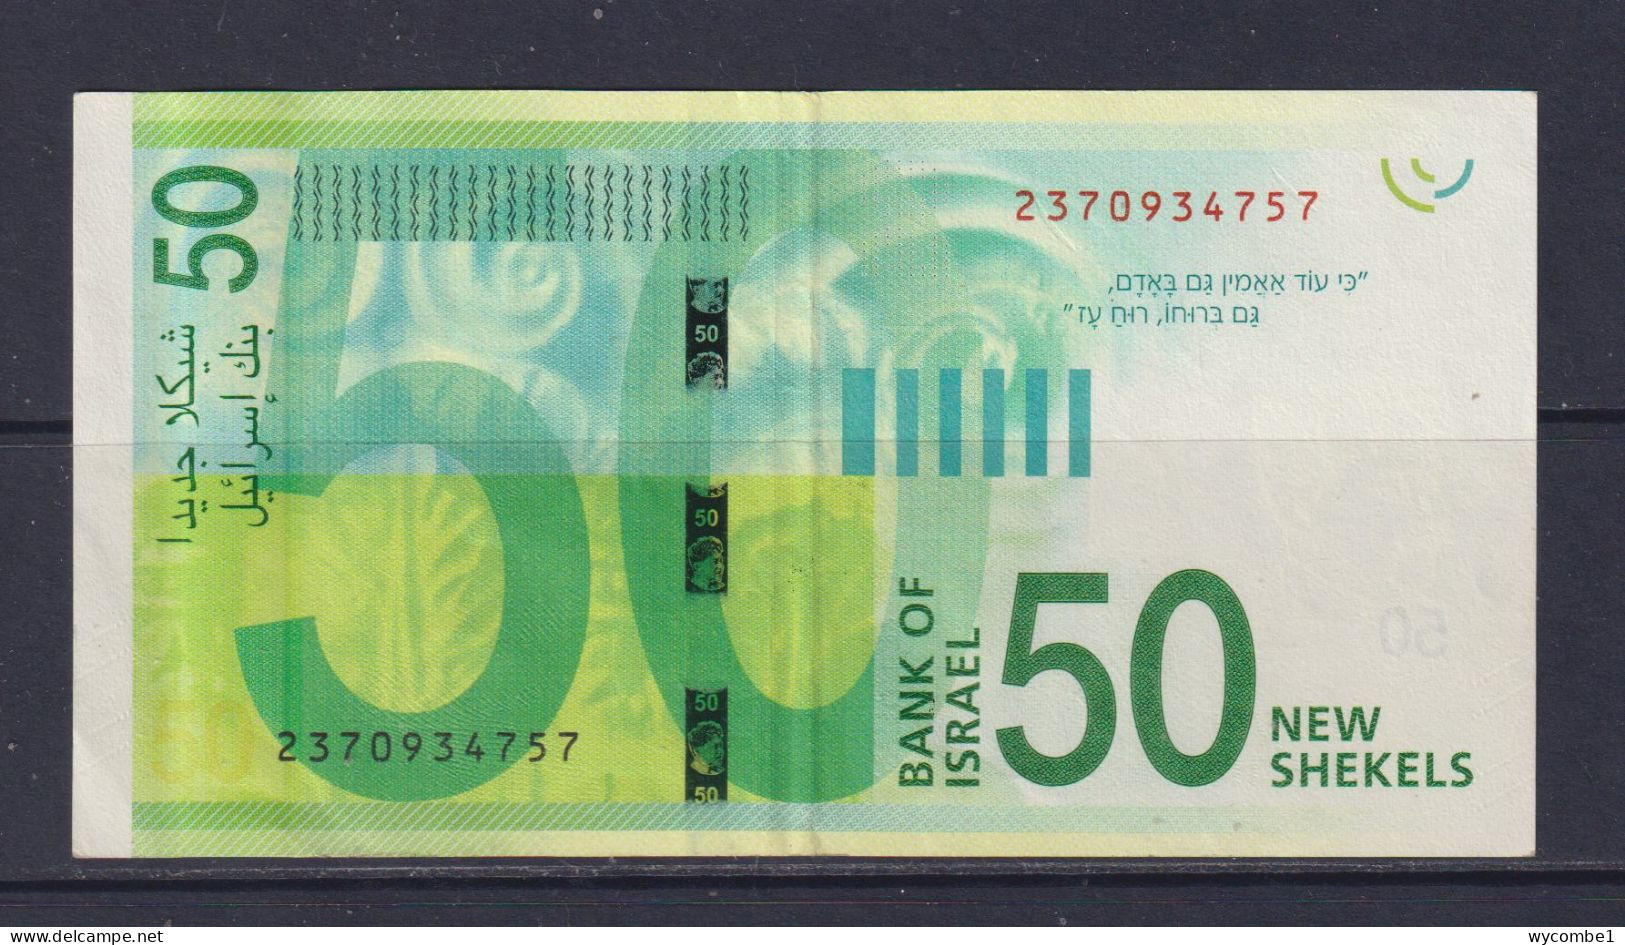 ISRAEL - 2014 50 New Shekels Circulated Banknote - Israel